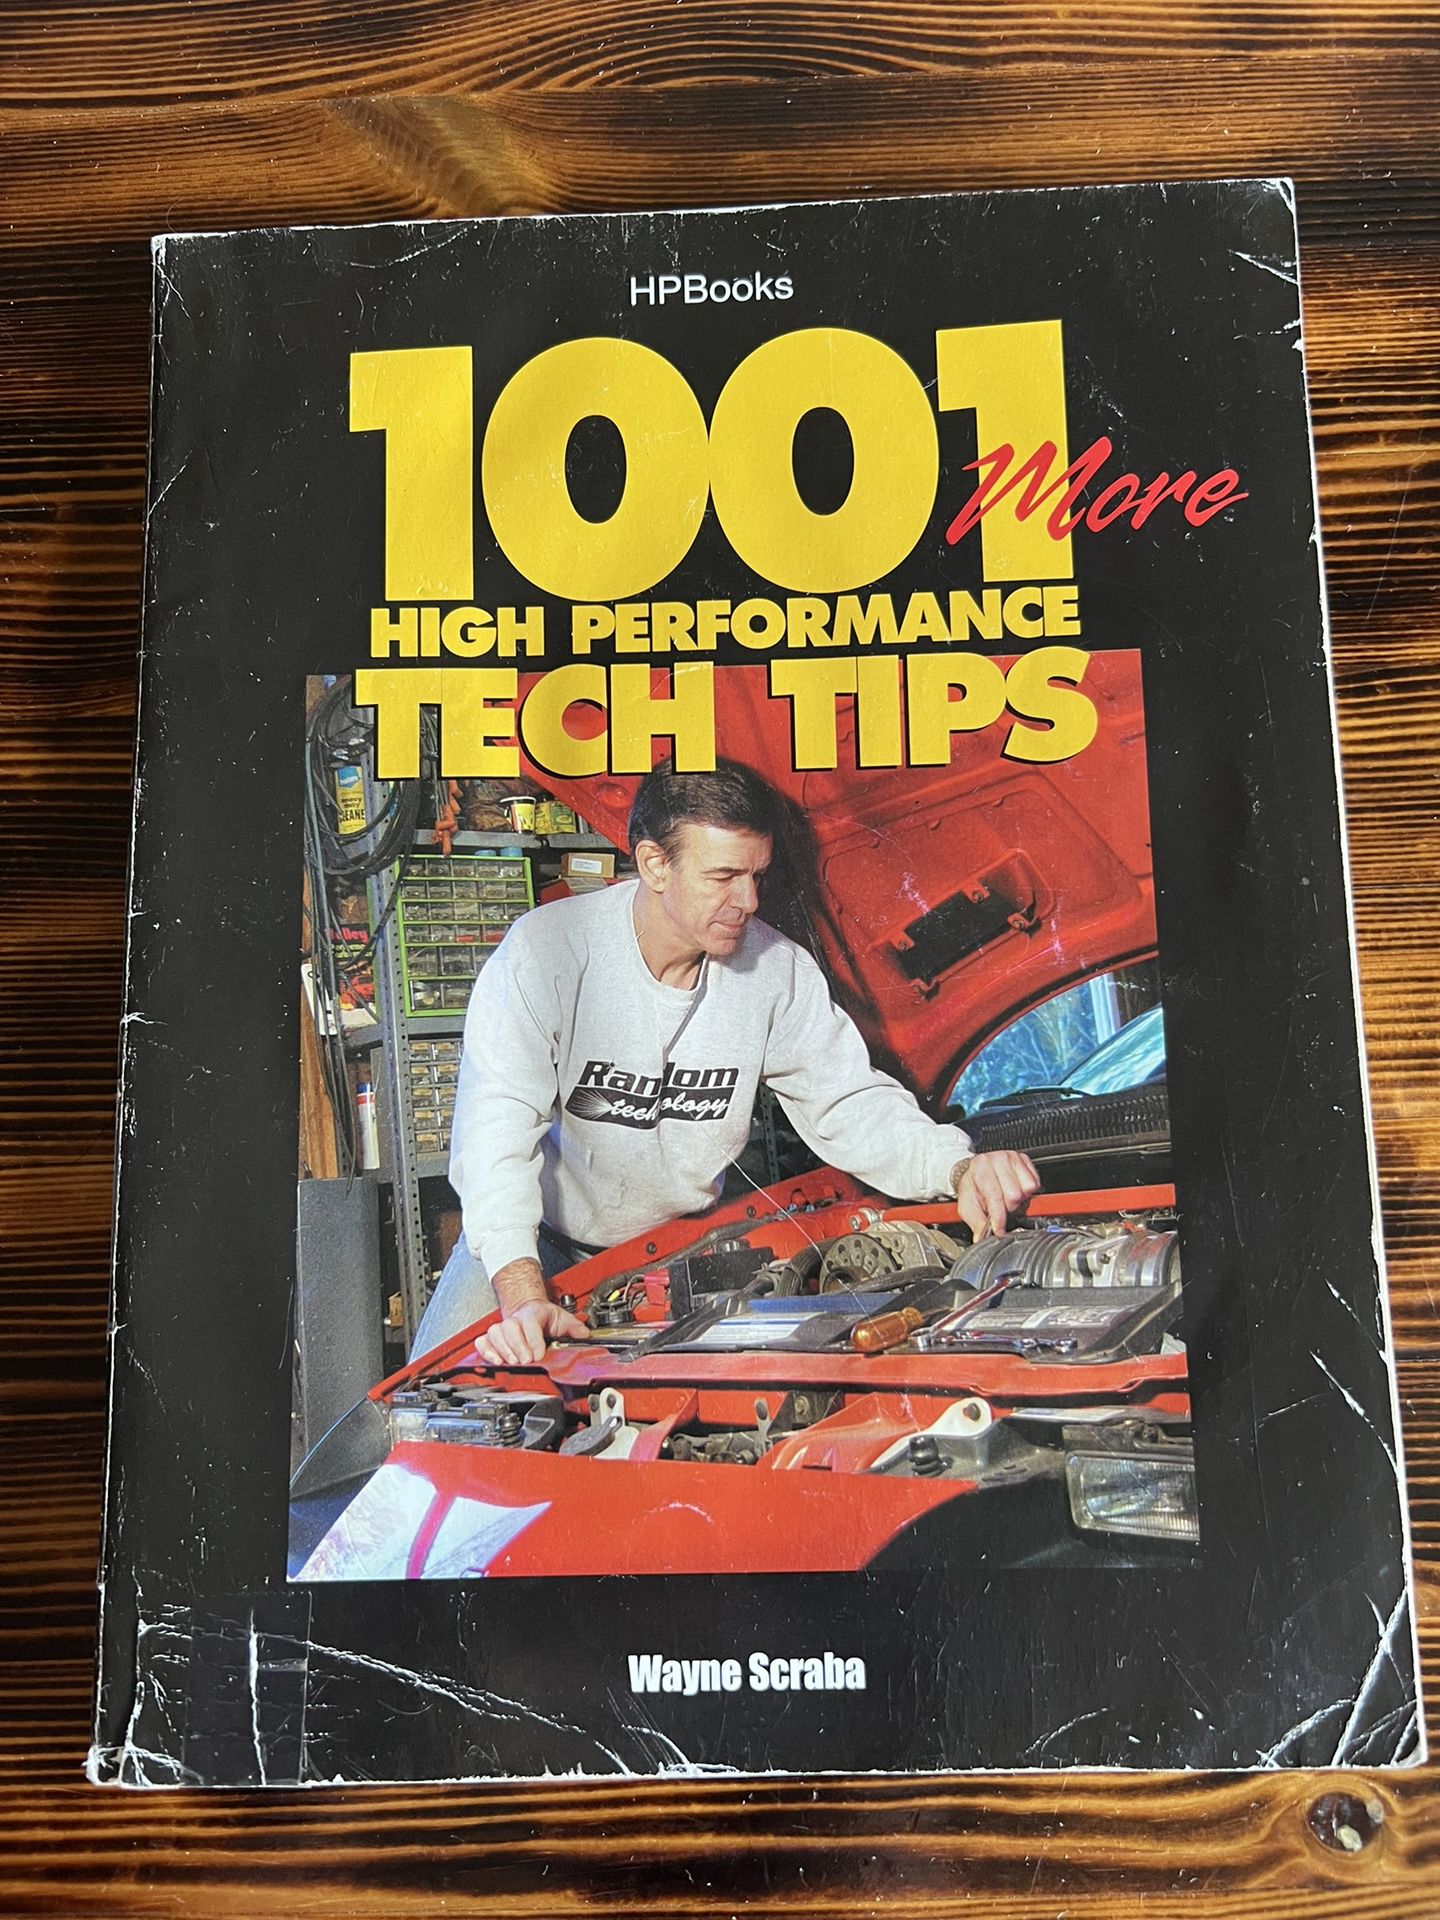 HP Books 1001 High Performance Tech Tips 